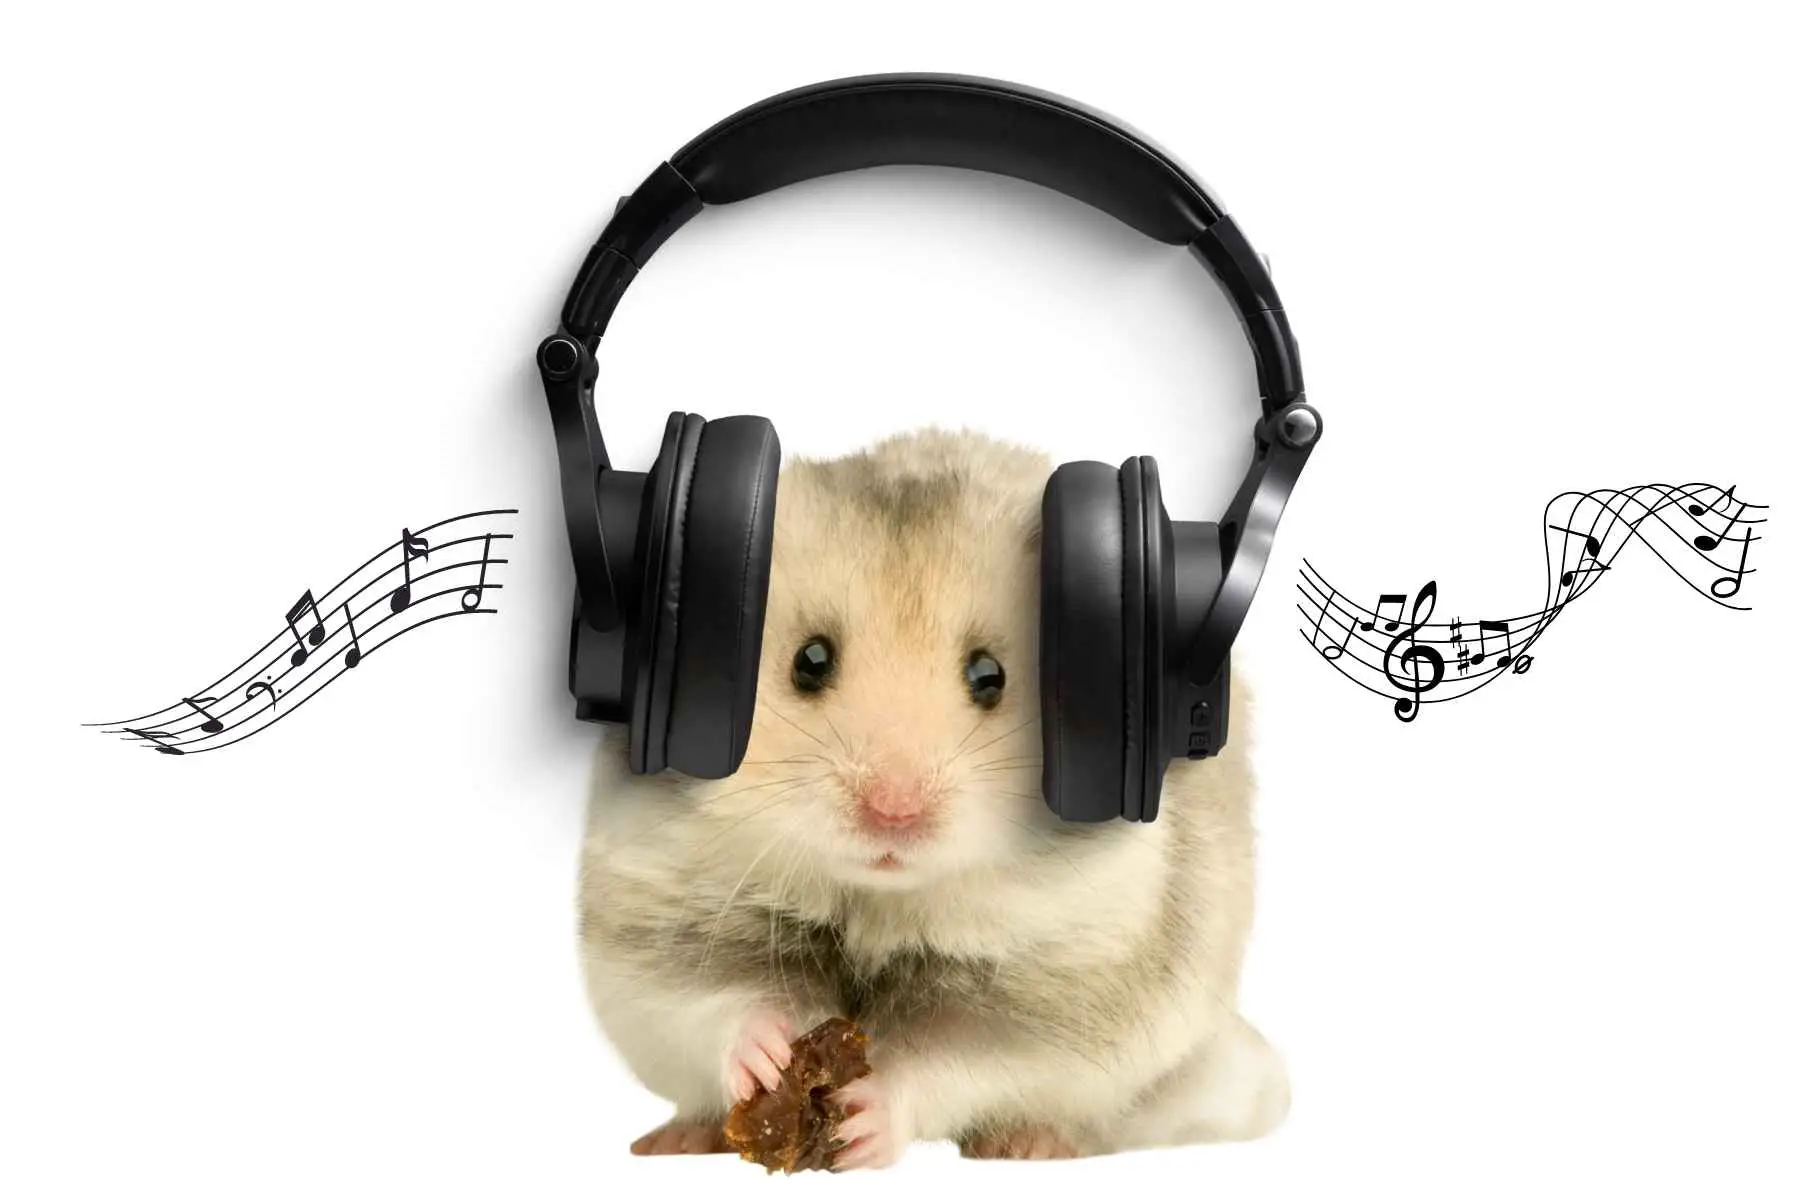 A hamster listening to music in earphones